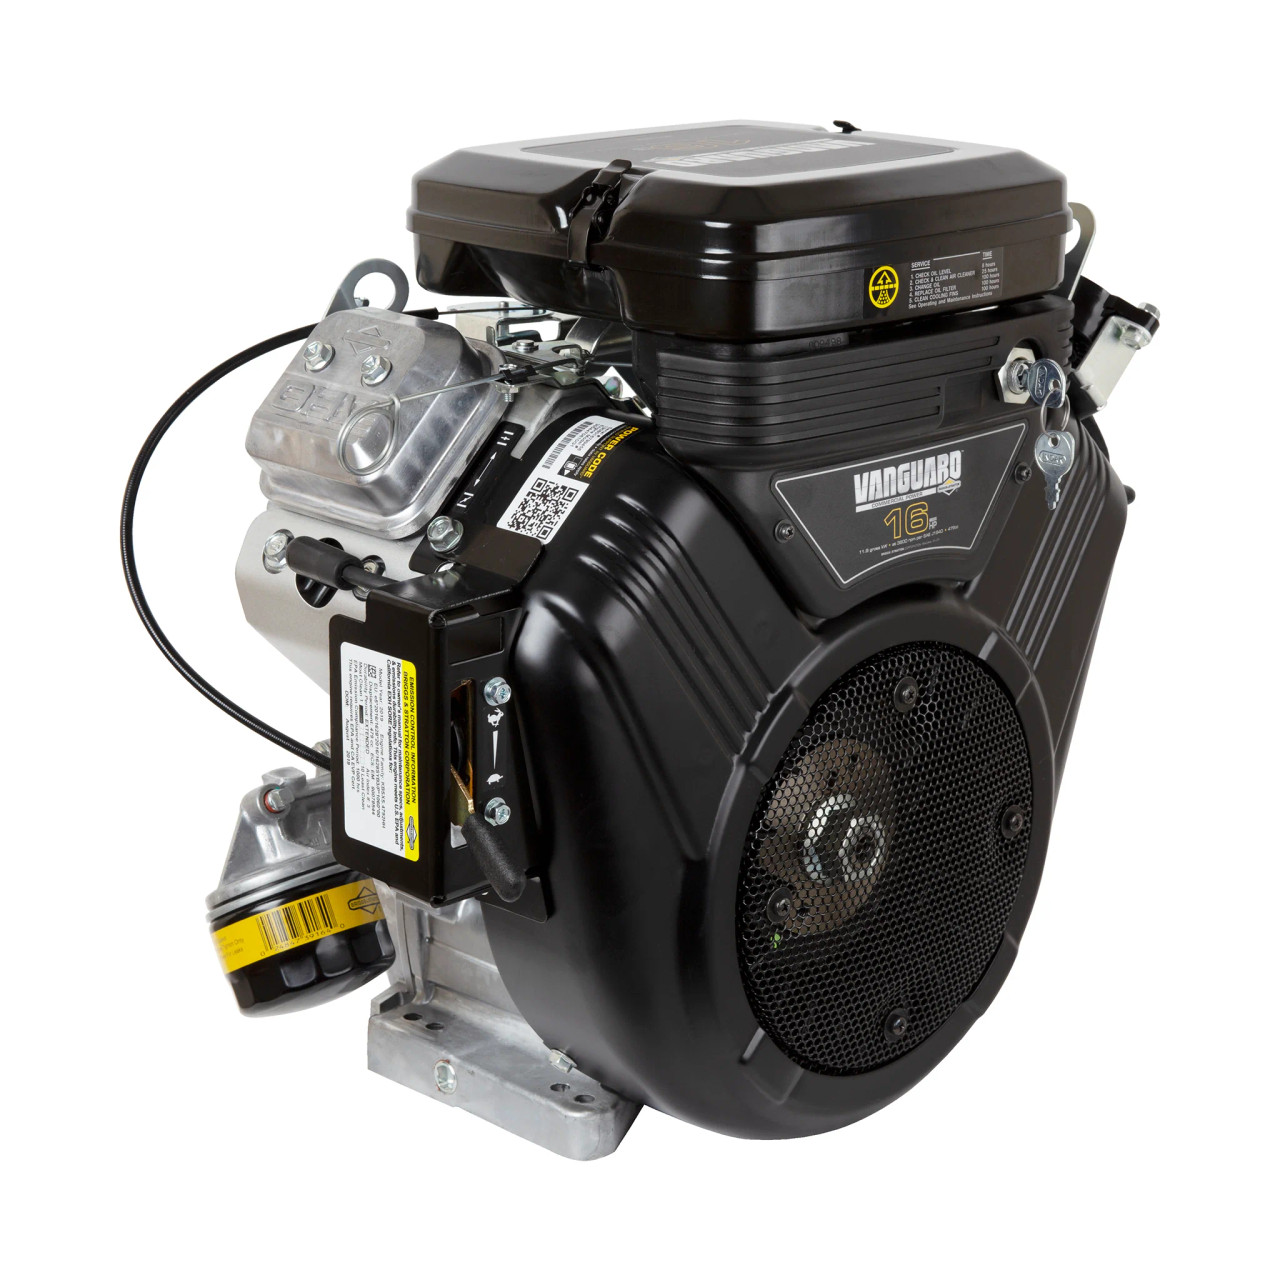 Vanguard® 16.0 HP 479cc Horizontal Shaft Engine
305447-0610-G1